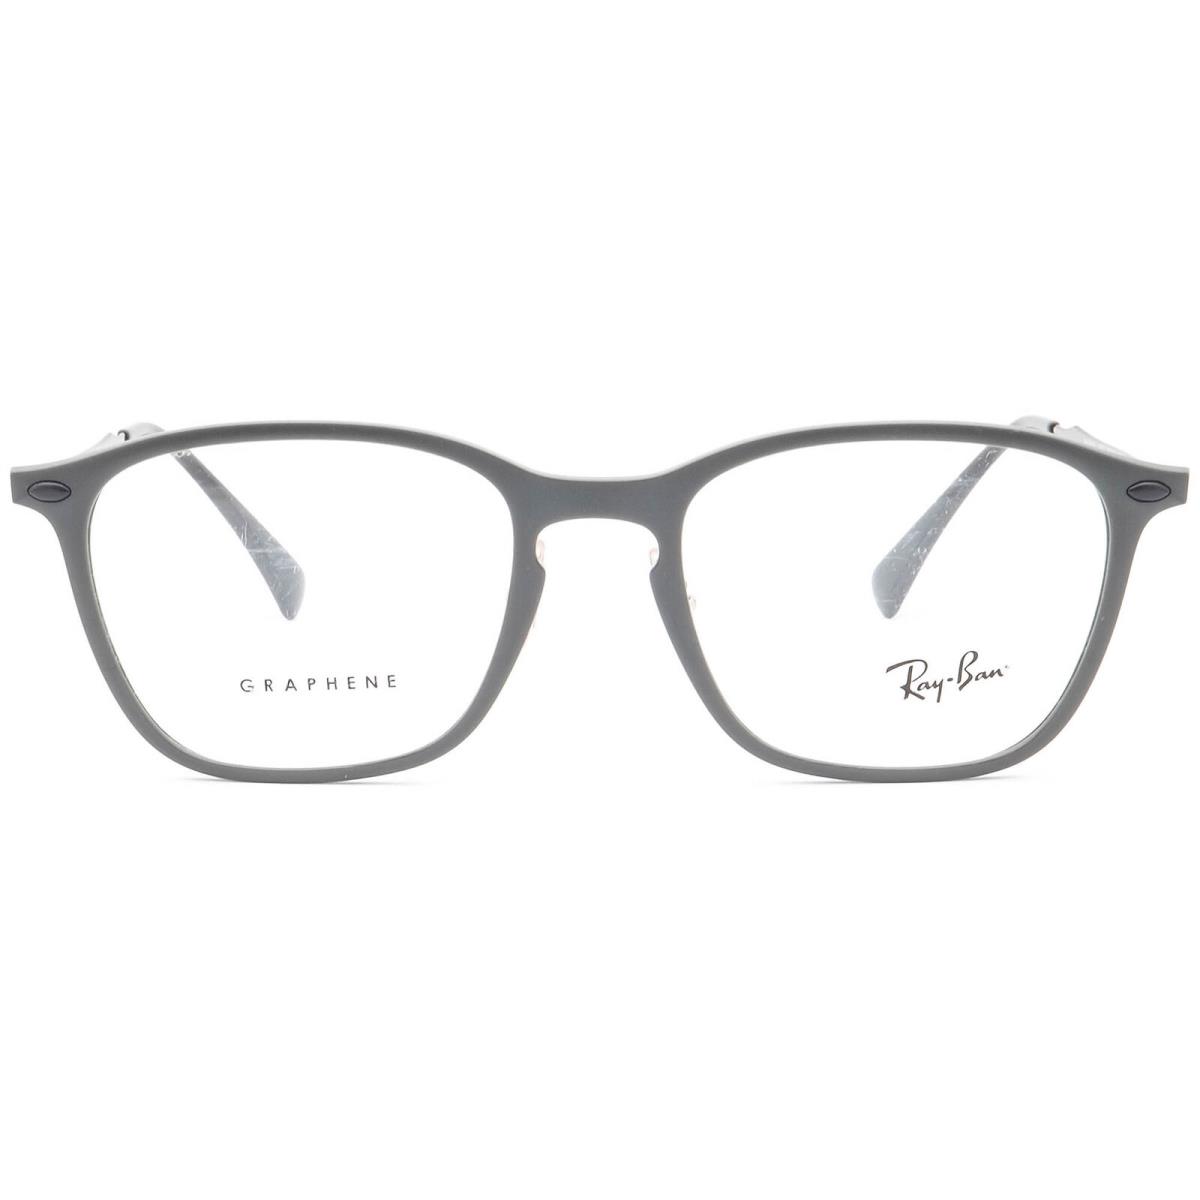 Ray-ban Eyeglasses RB 8955 5757 Graphene Grey/gunmetal Square Frame 53 19 145